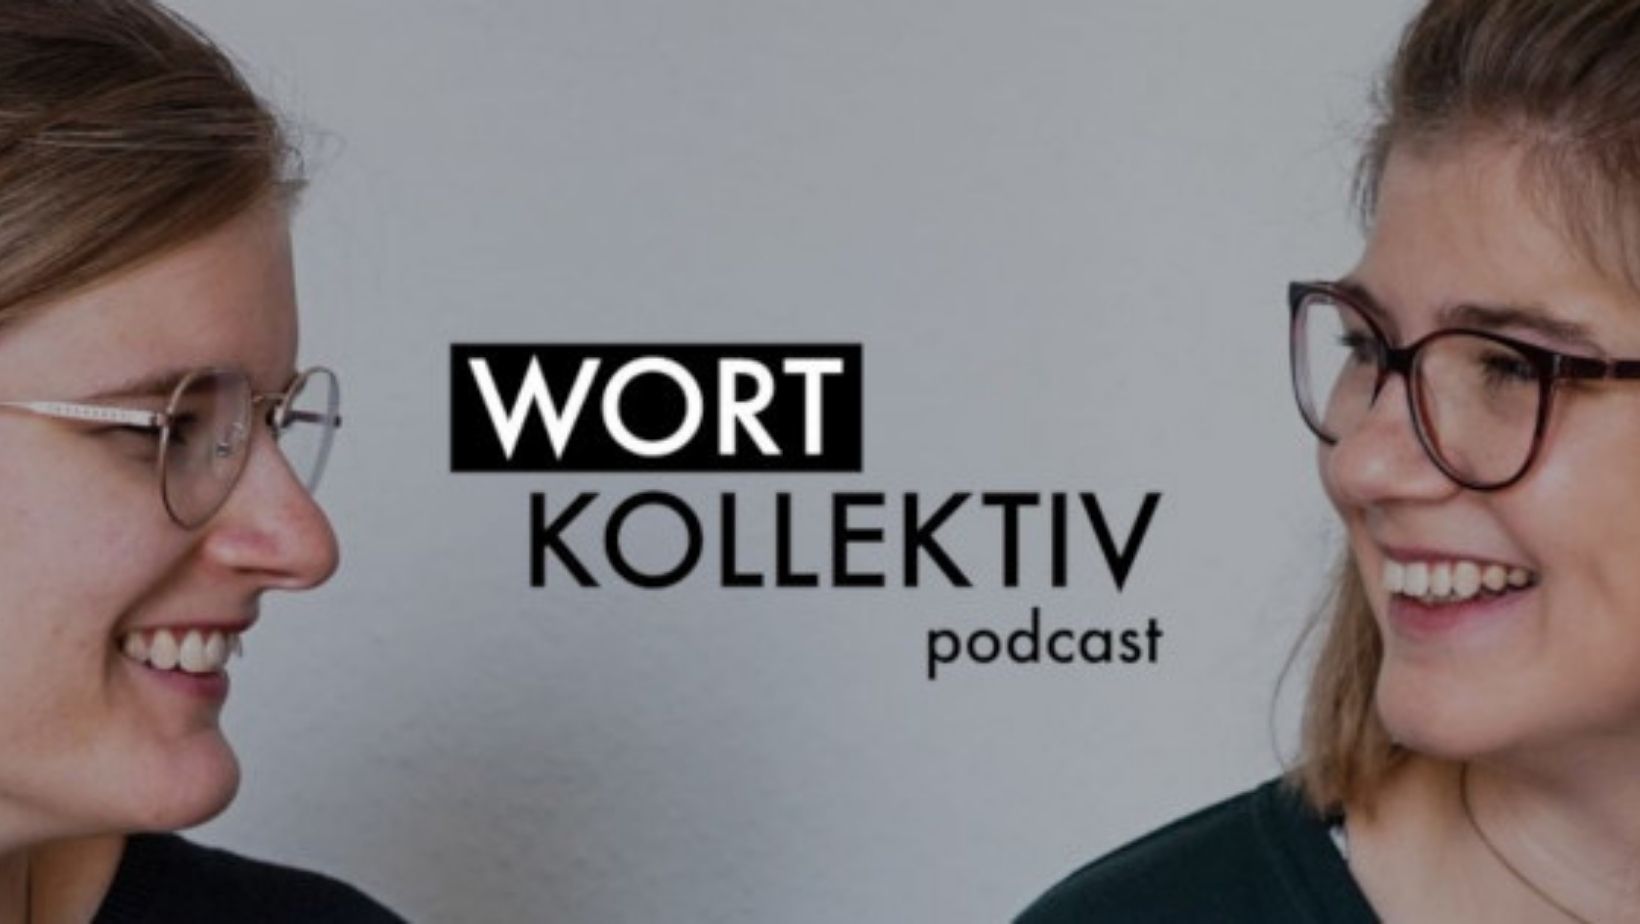 Wort-Bild-Marke "Wortkollektiv-Podcast"